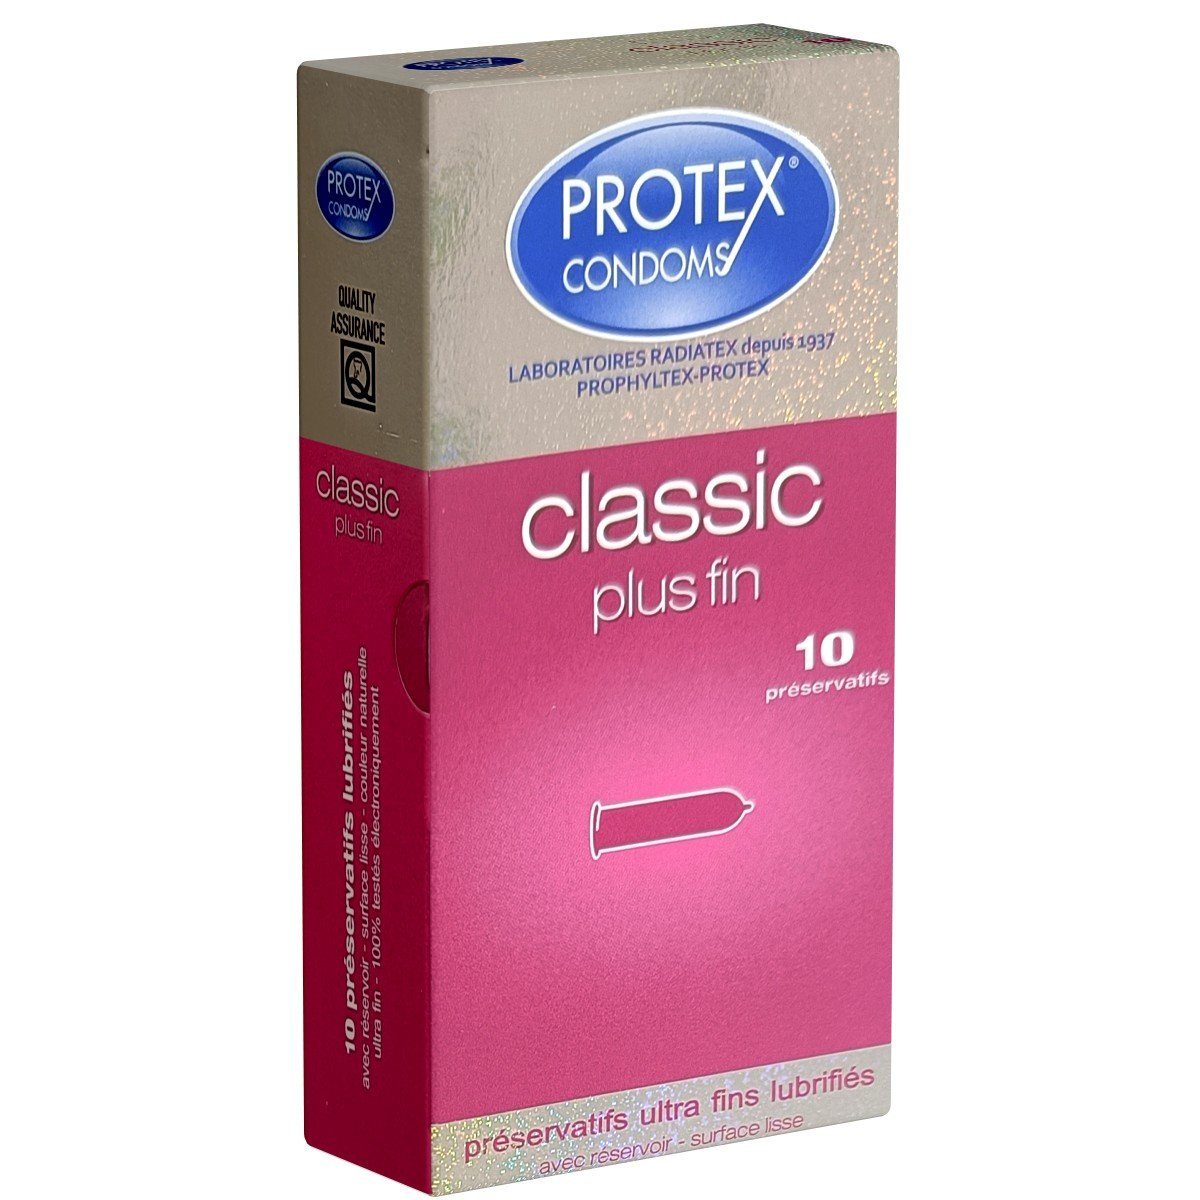 10 Protex aus superdünne St., Kondome Plus CLASSIC Kondome Packung mit, Frankreich Fin